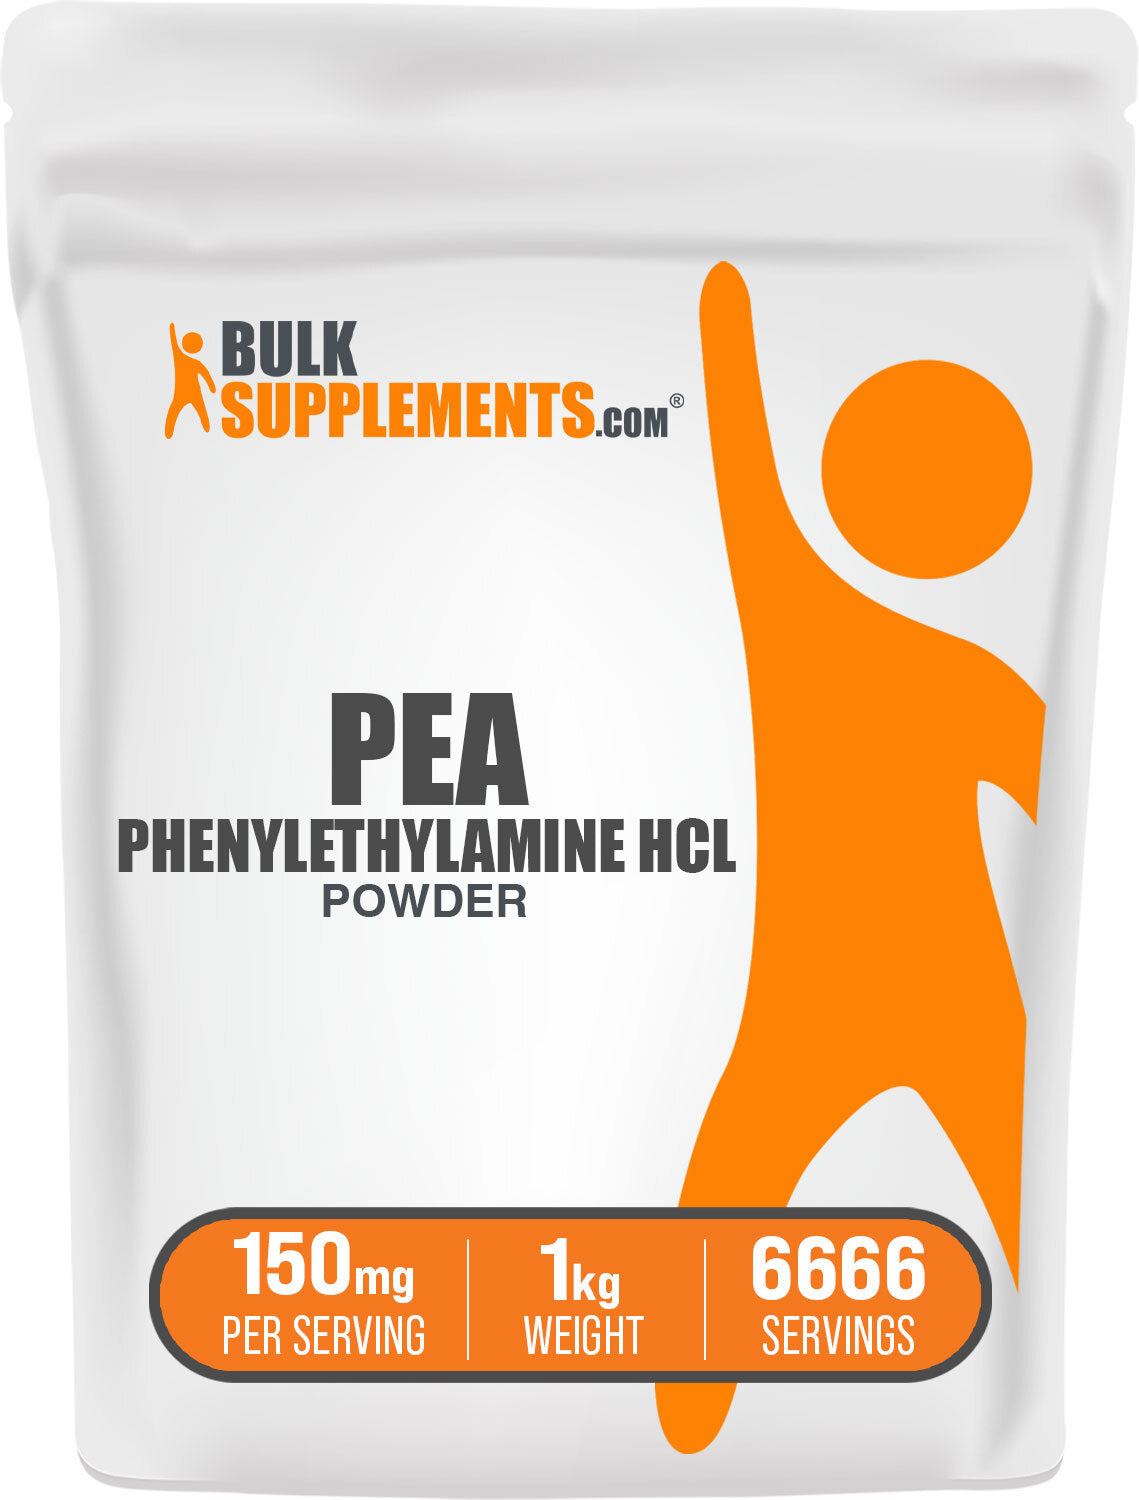 Phenylethylamine HCl (PEA) Powder 1kg bag